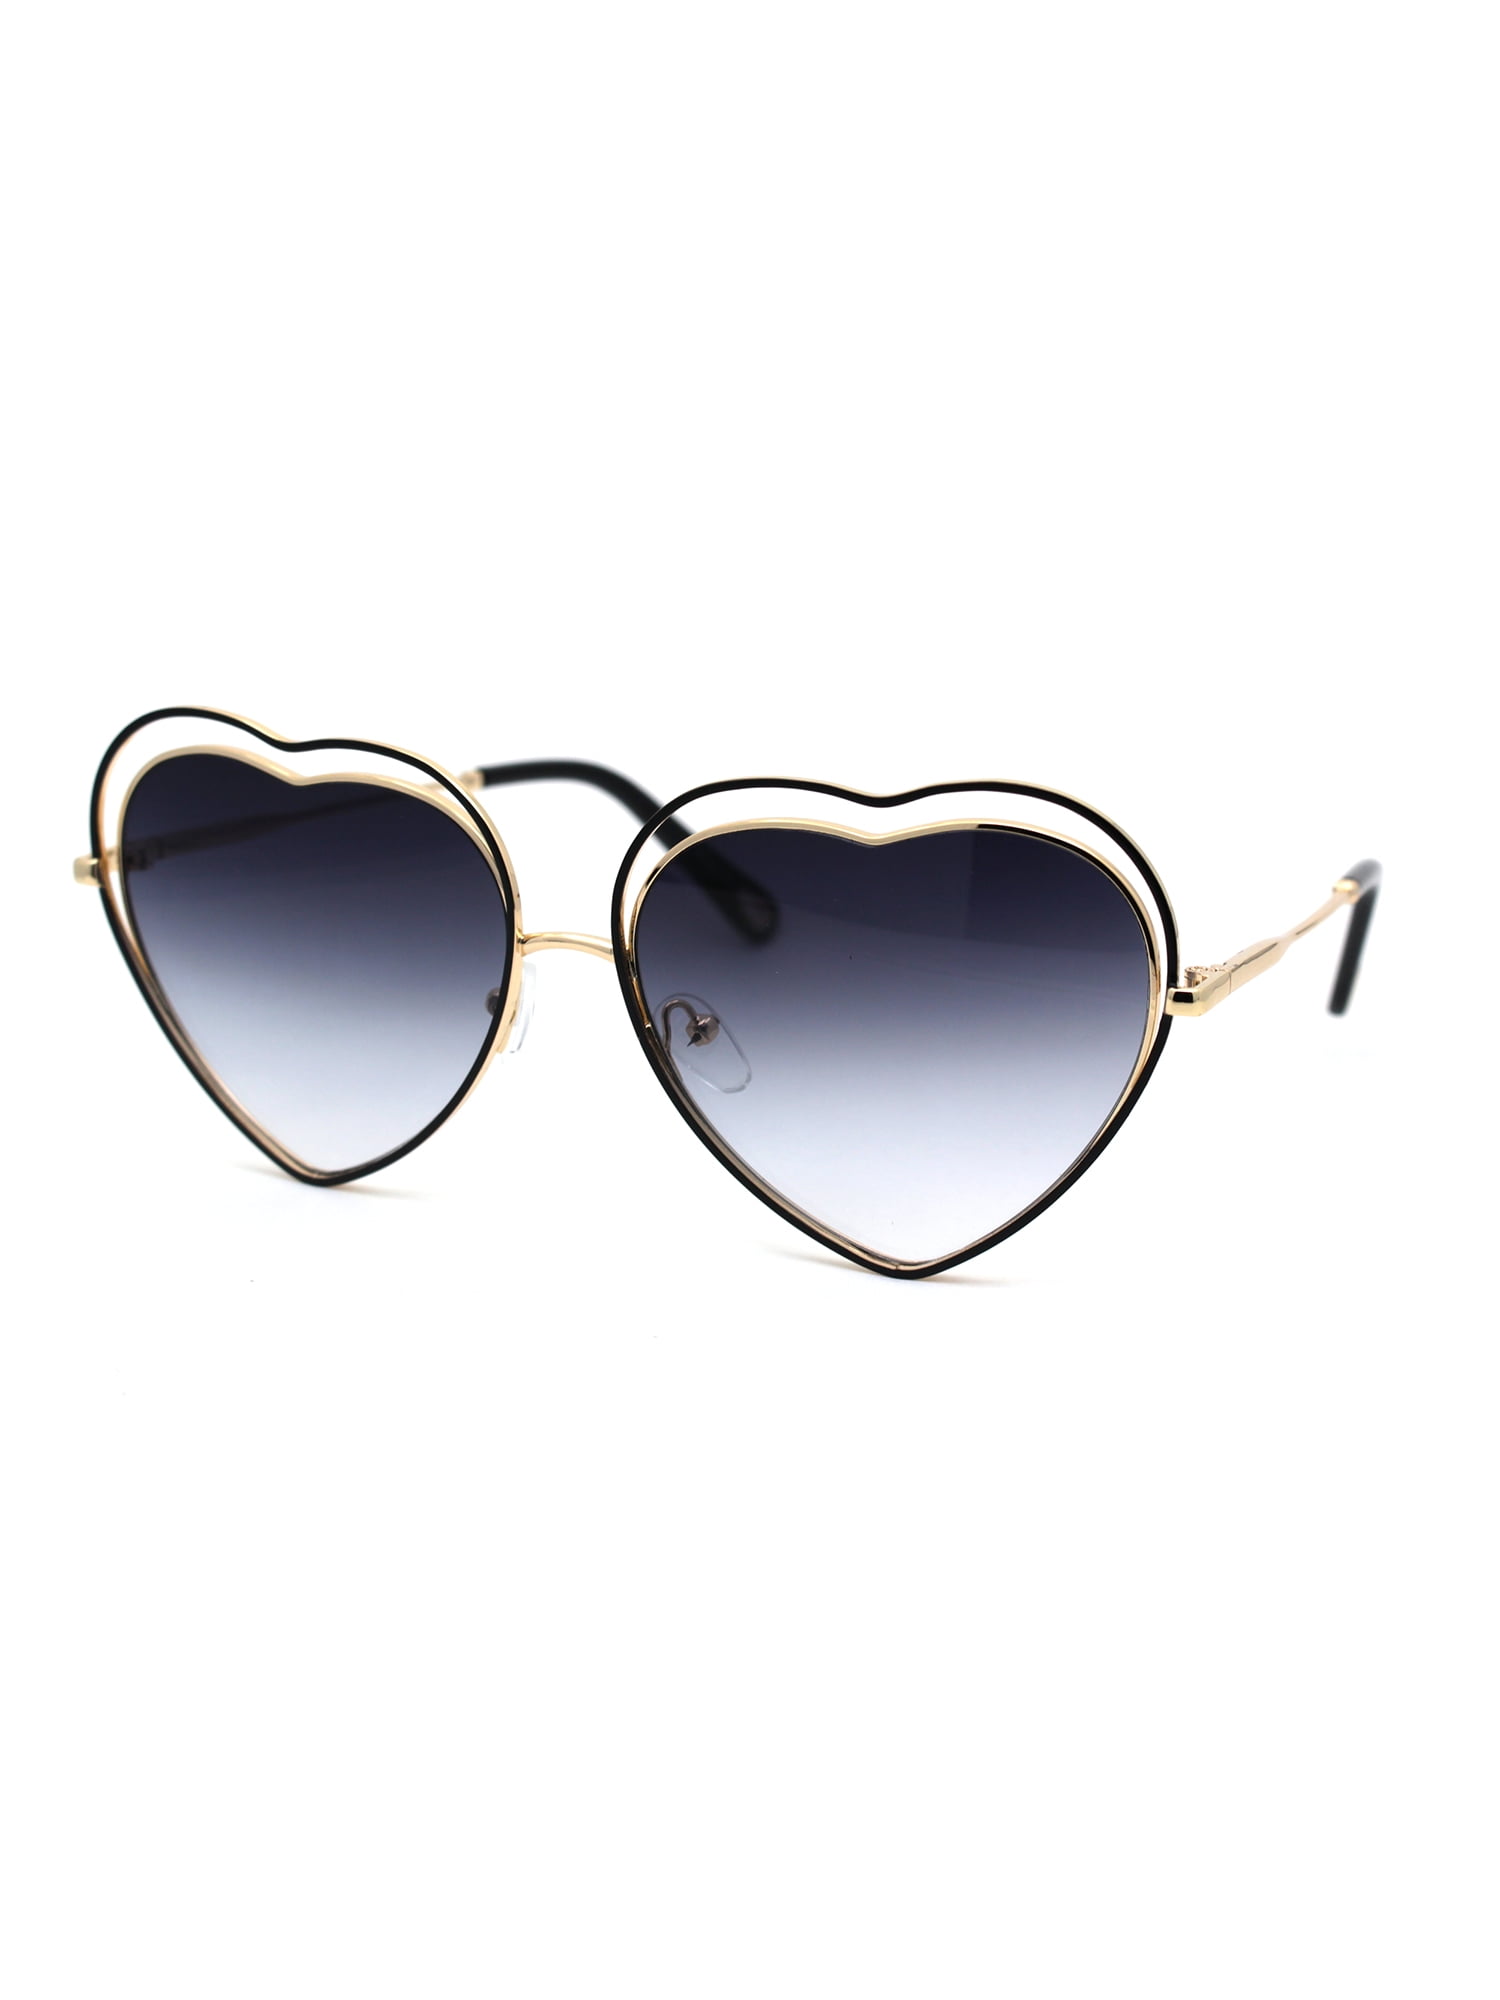 SA106 - Womens Double Metal Rim Valentines Heart Shape Sunglasses Gold ...